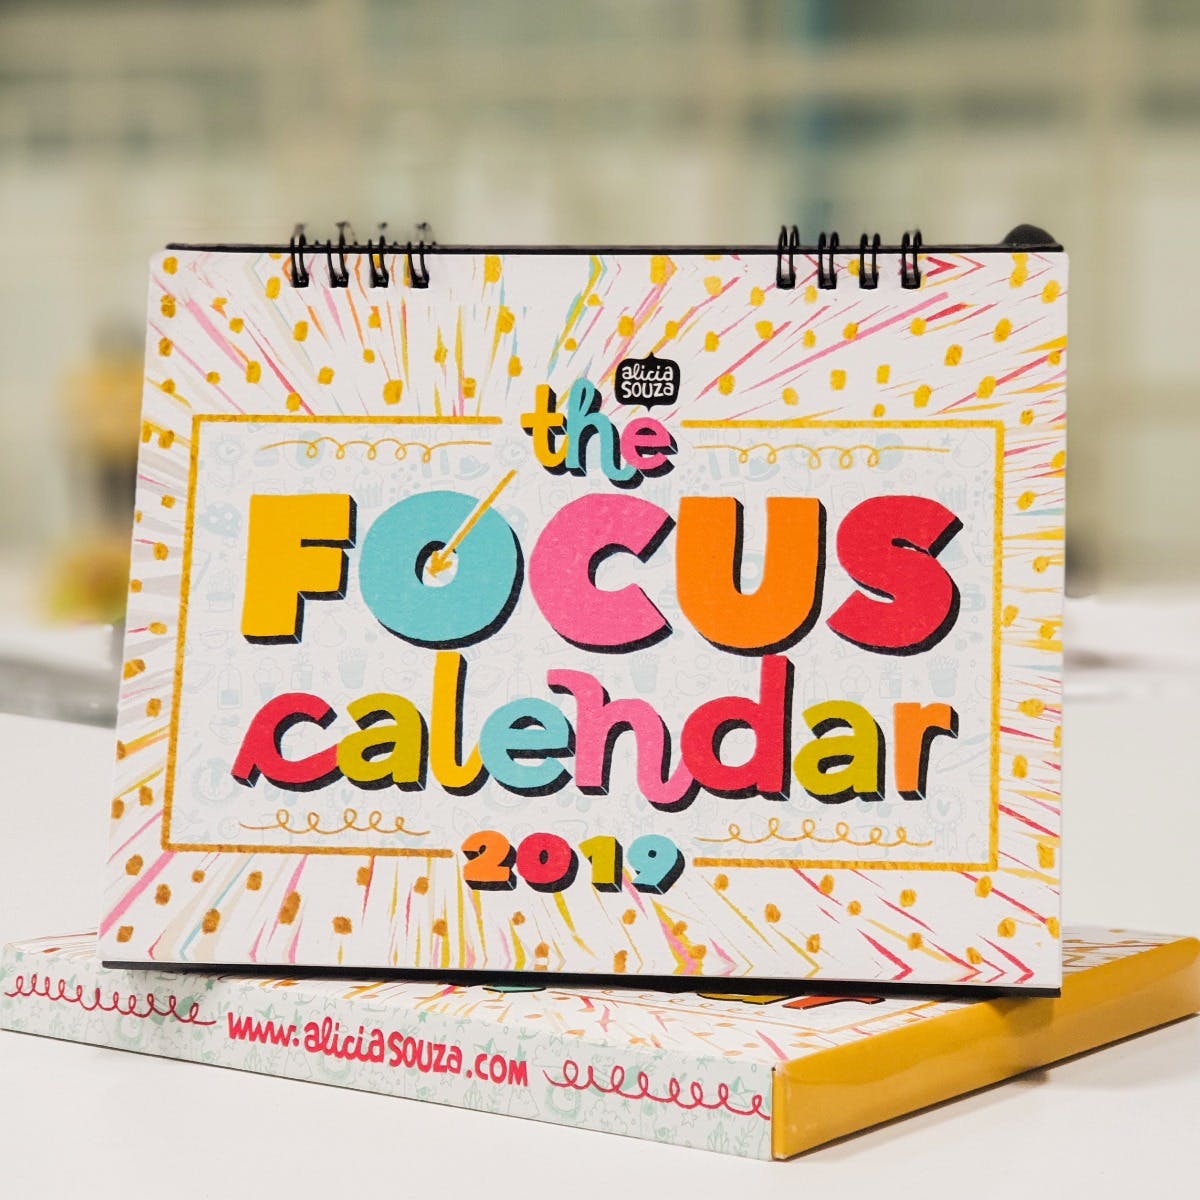 The "Focus" Desk Calendar 2019 